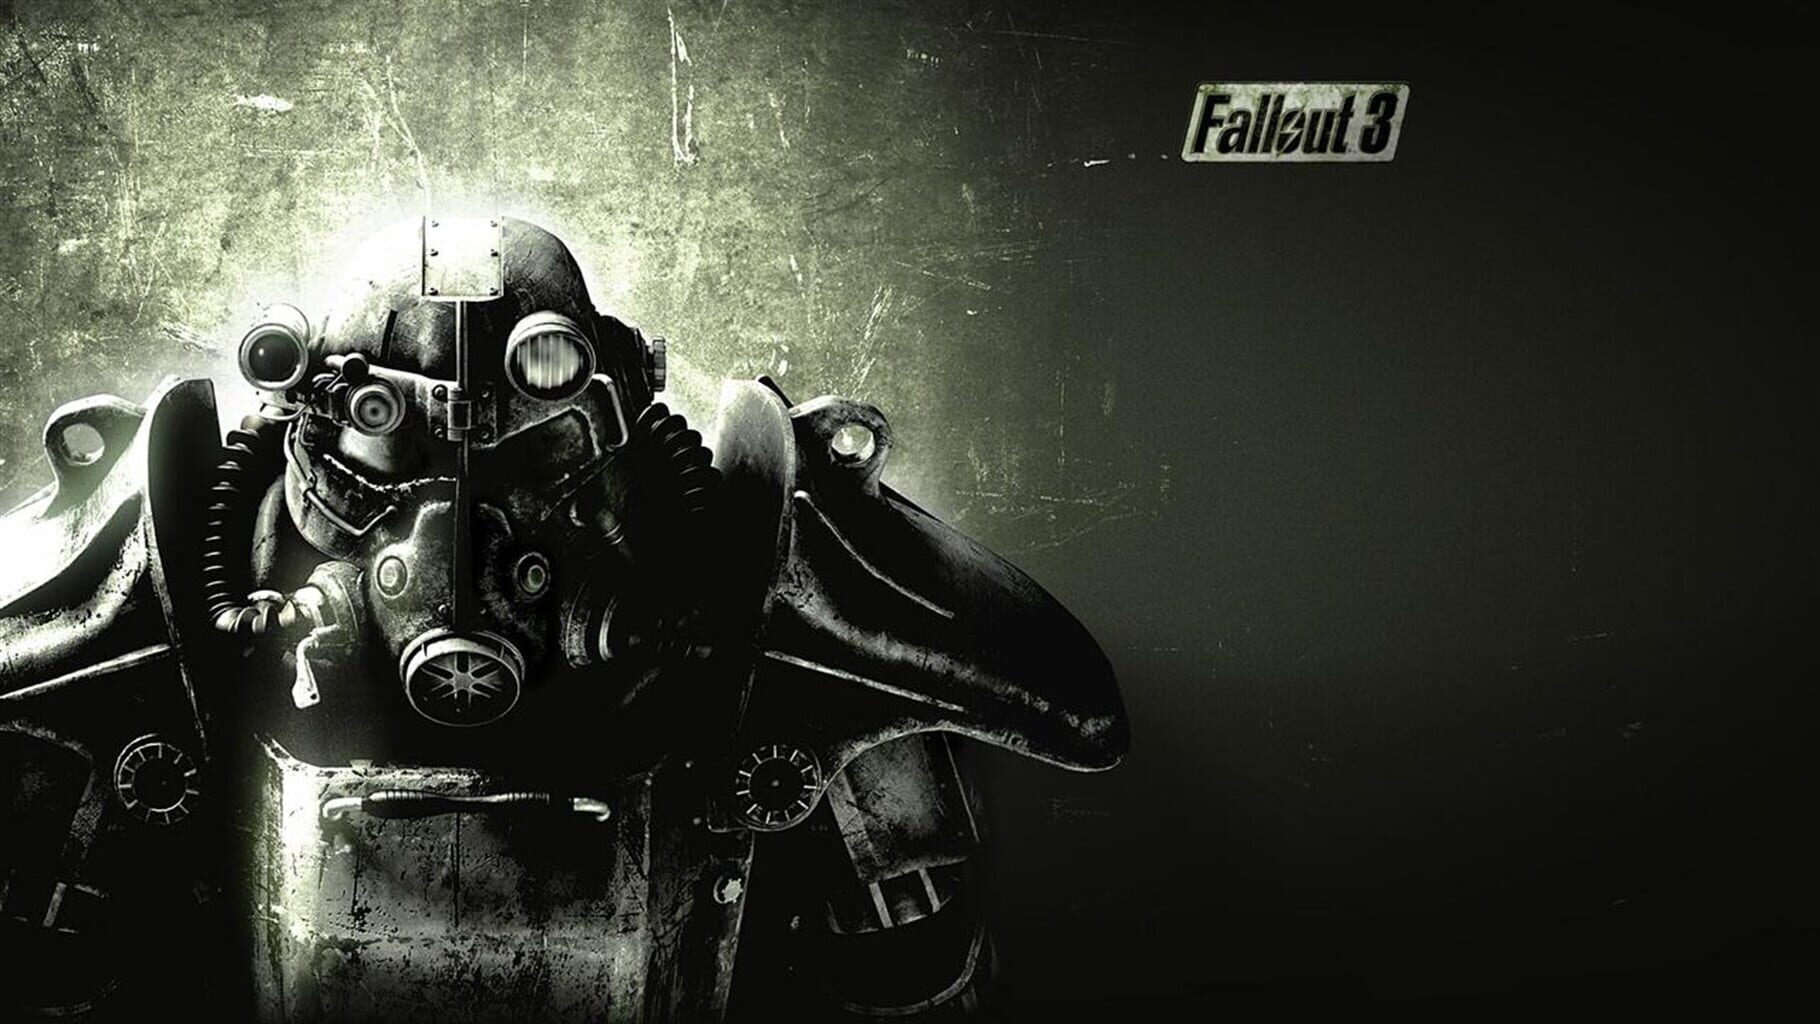 Fallout 3: Mothership Zeta Image